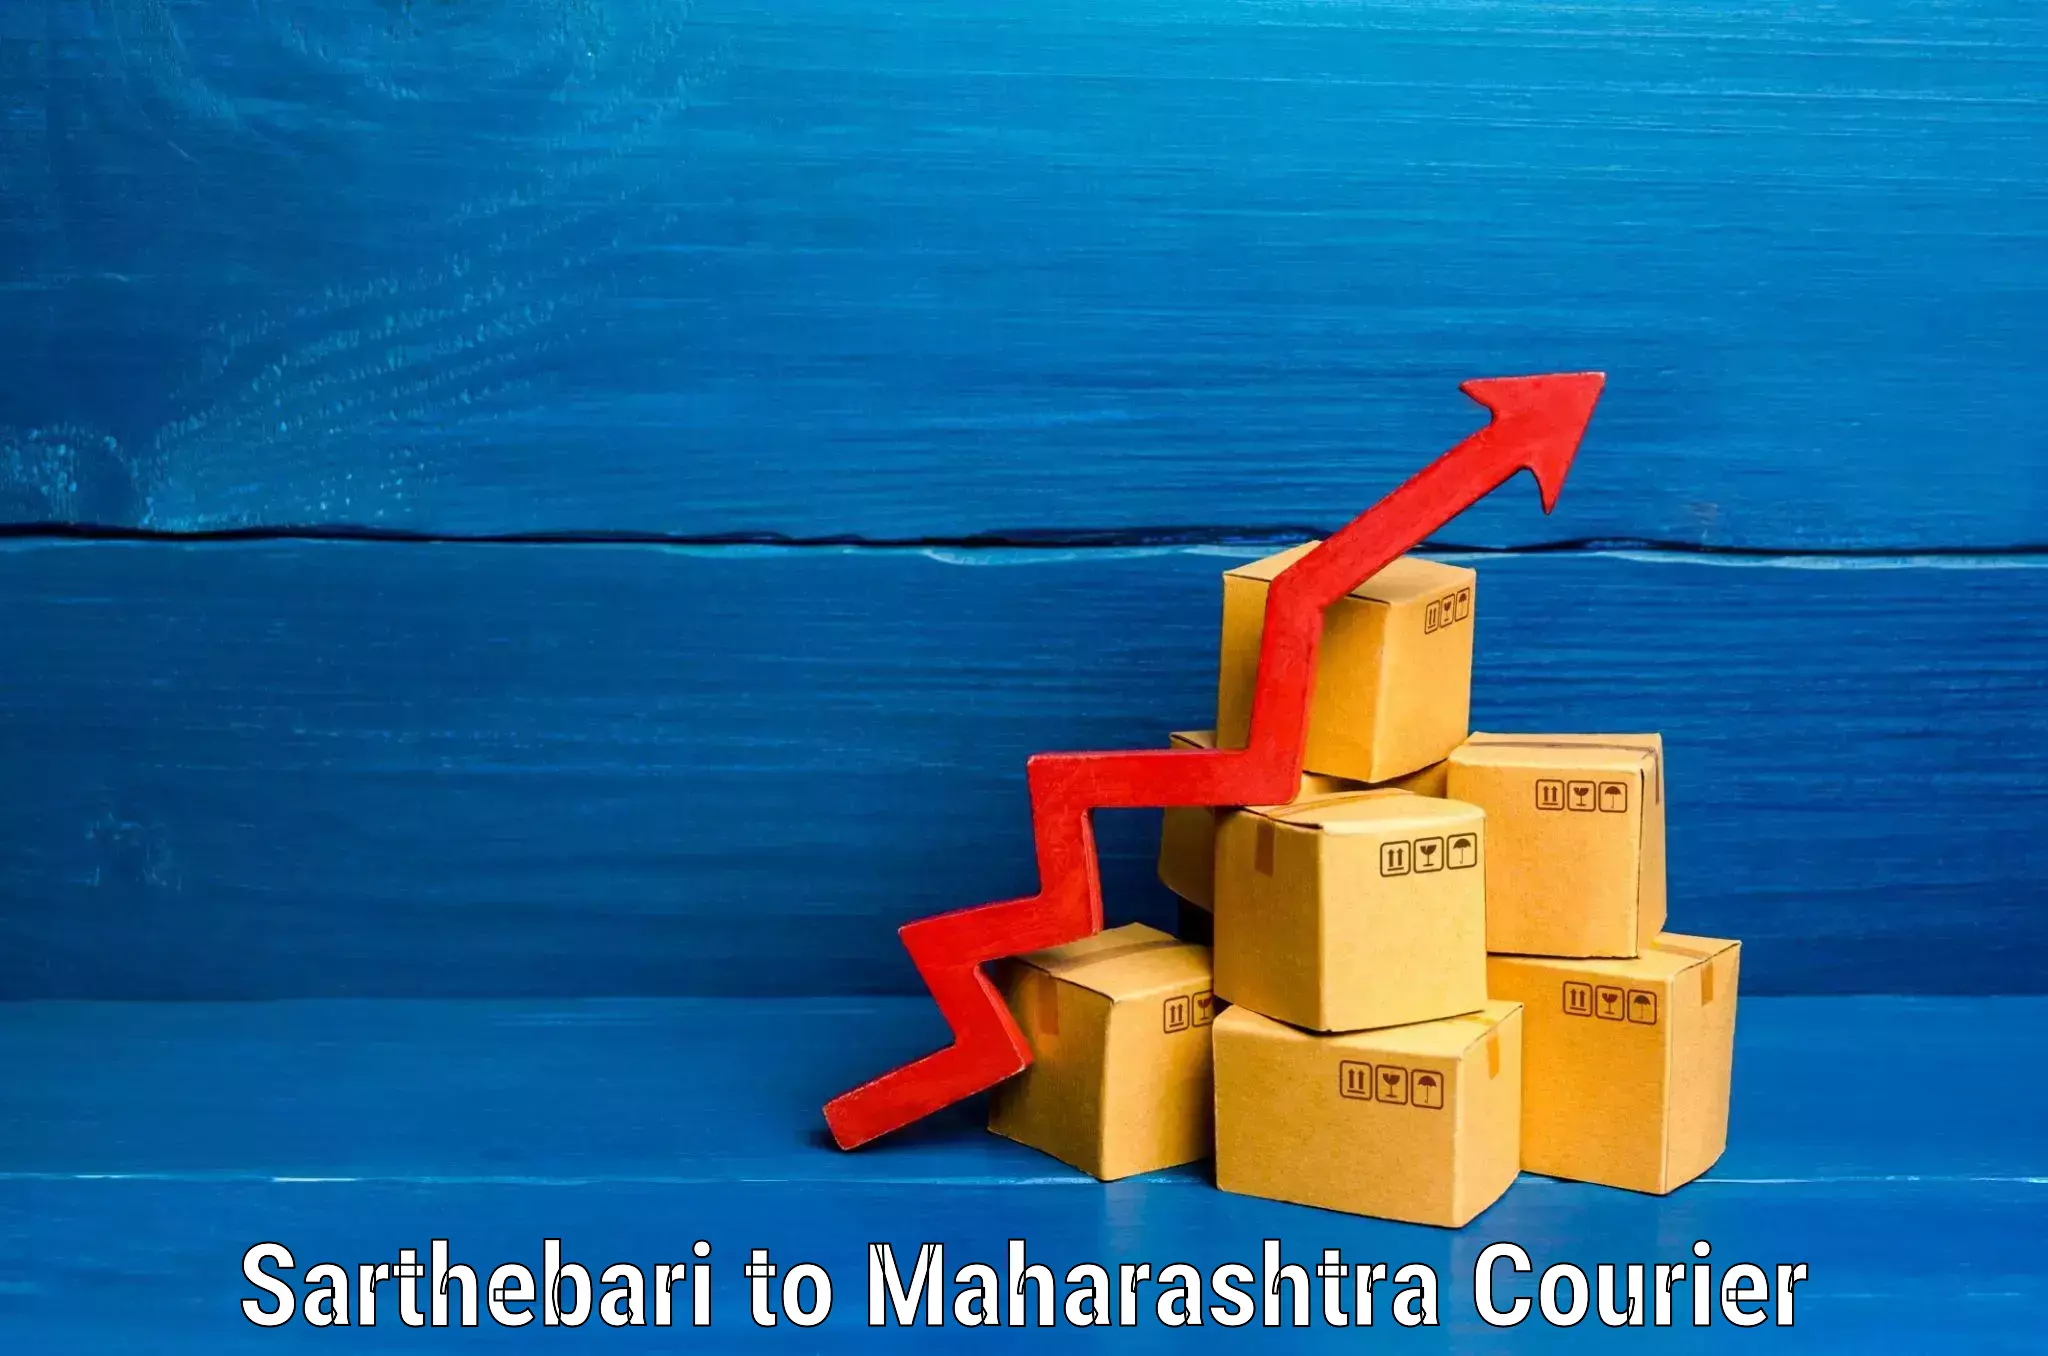 Luggage transport consultancy Sarthebari to Maharashtra